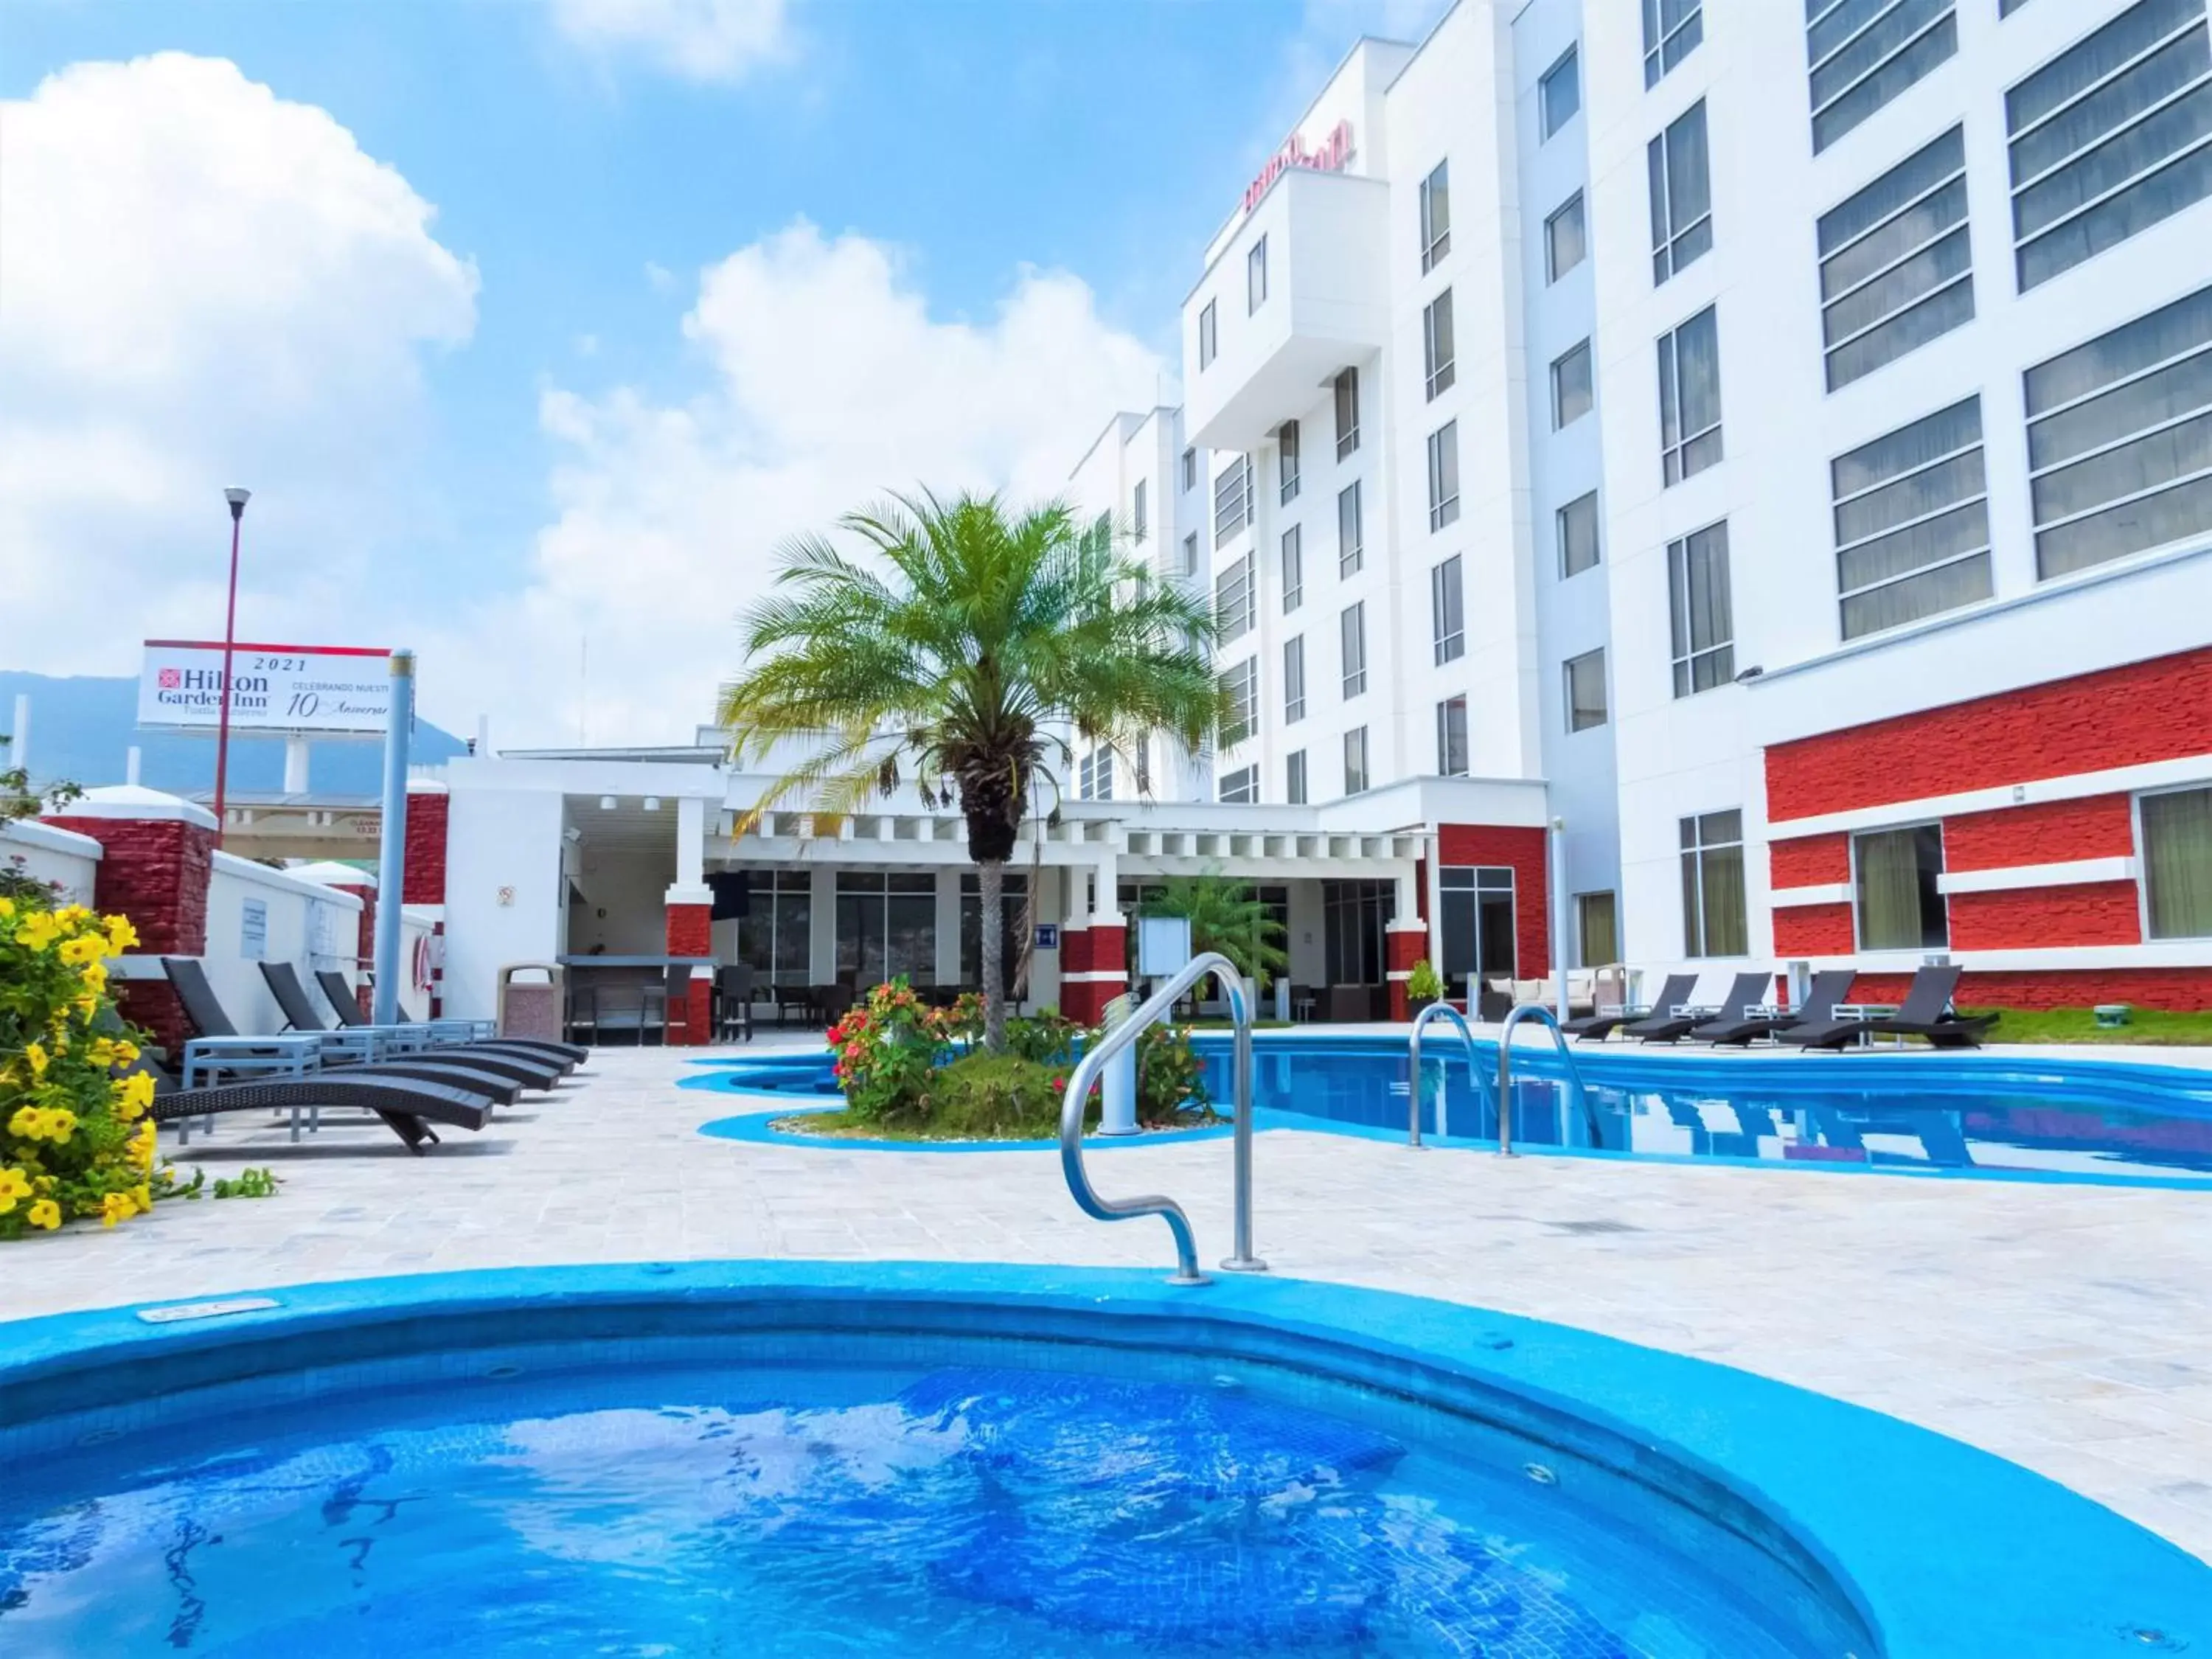 Swimming Pool in Hilton Garden Inn Tuxtla Gutierrez